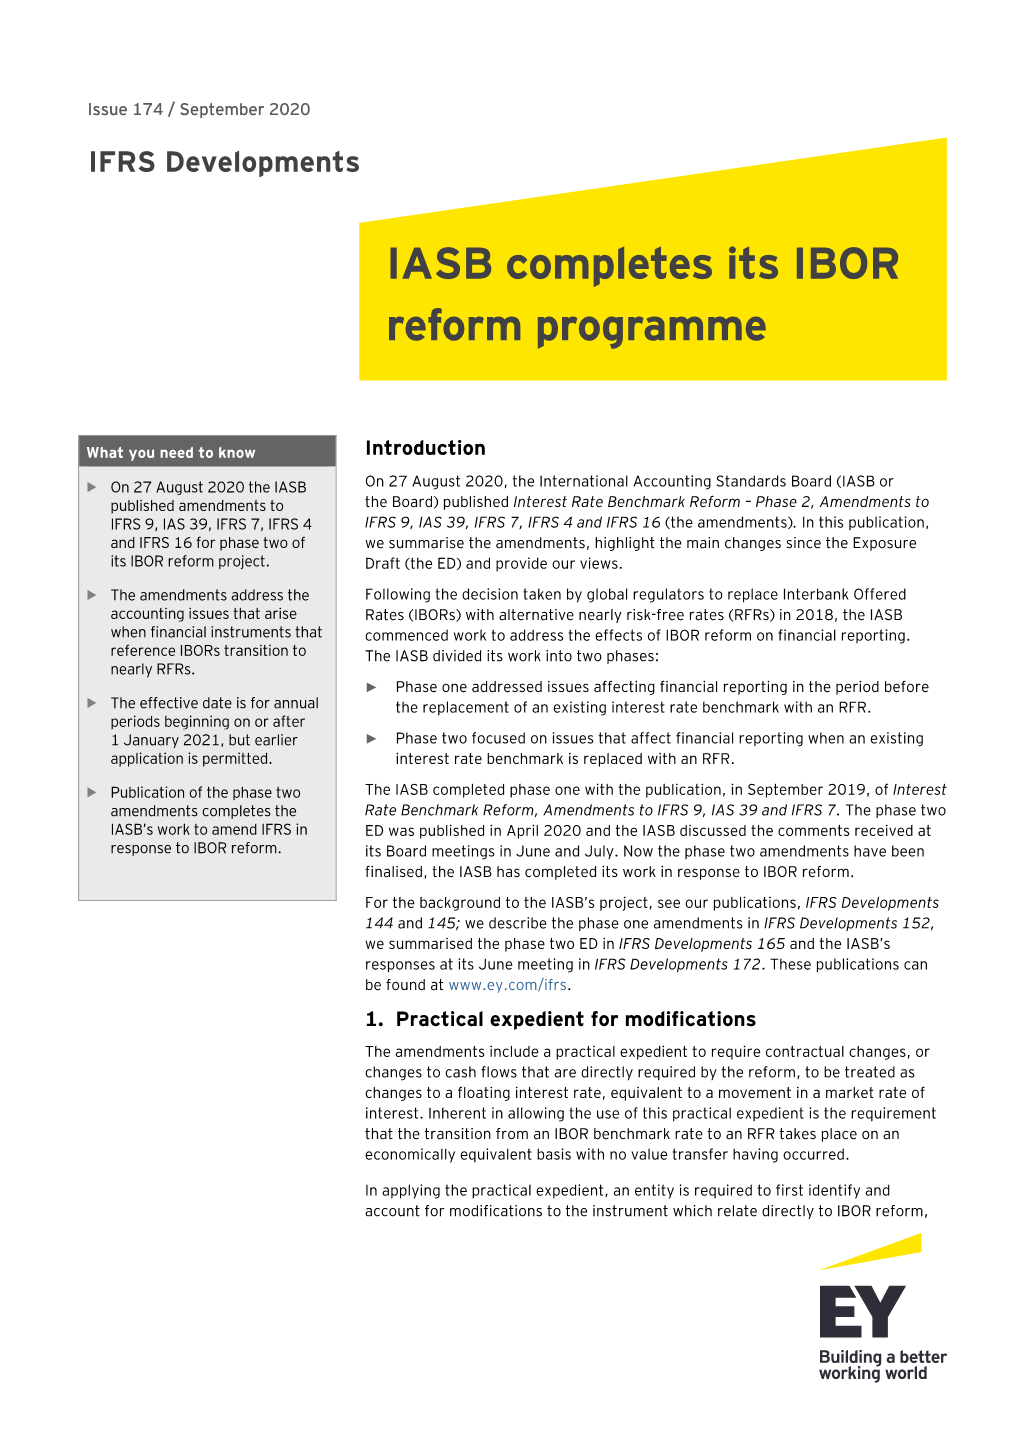 IASB Completes Its IBOR Reform Programme